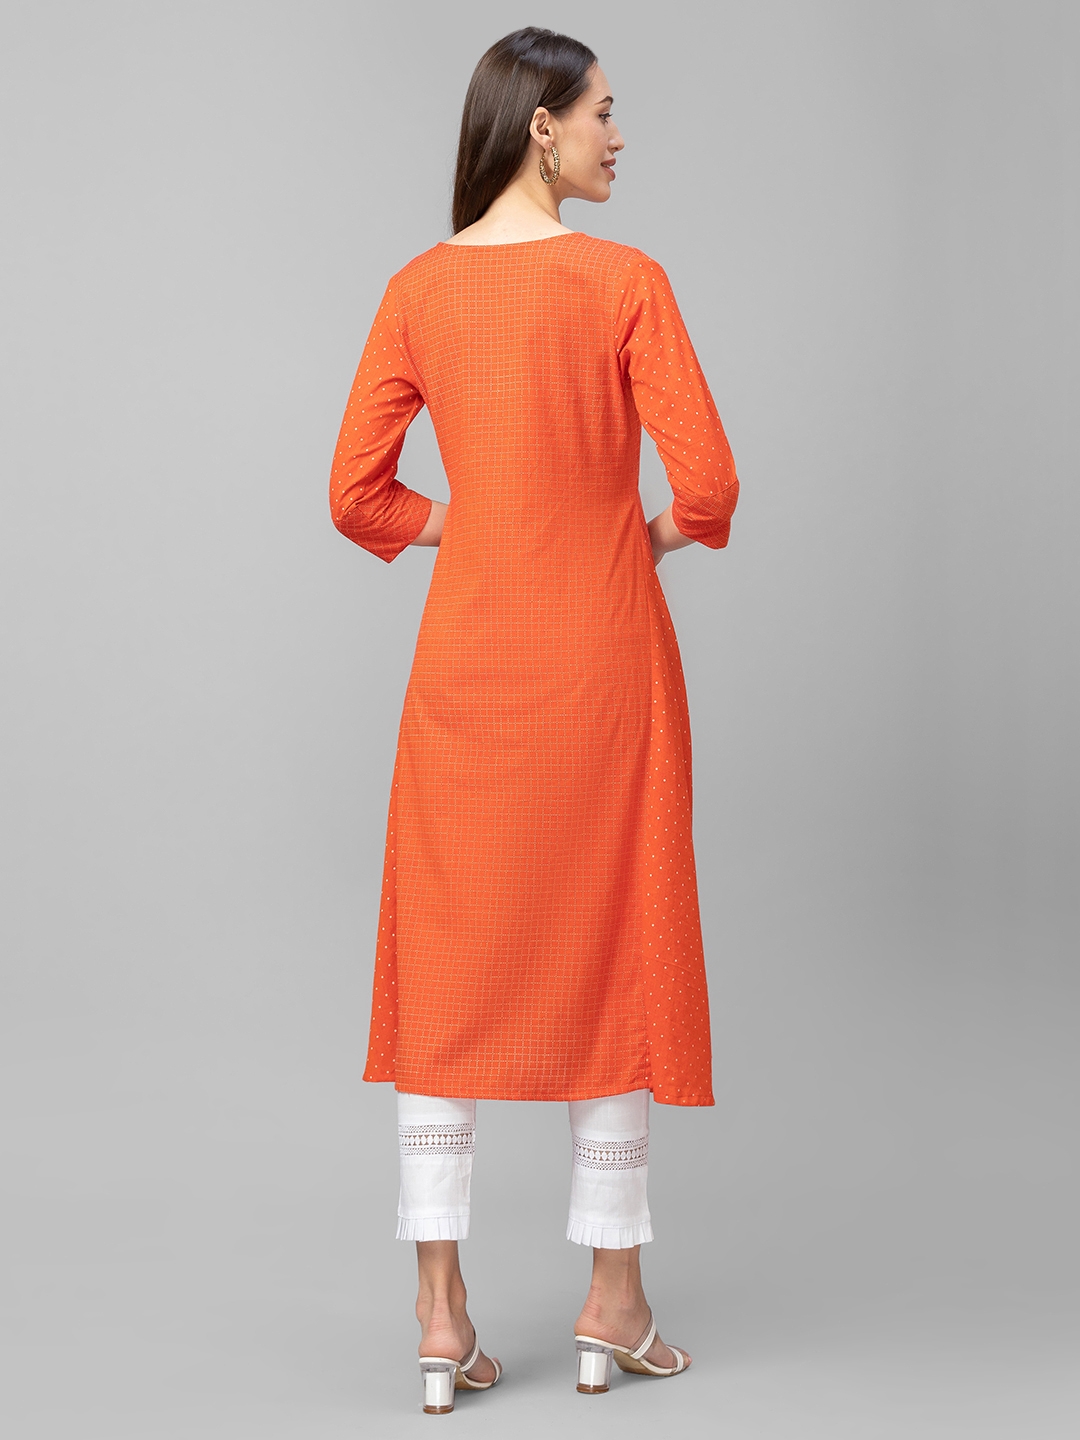 globus | Women's Orange Cotton Printed Kurtas 2